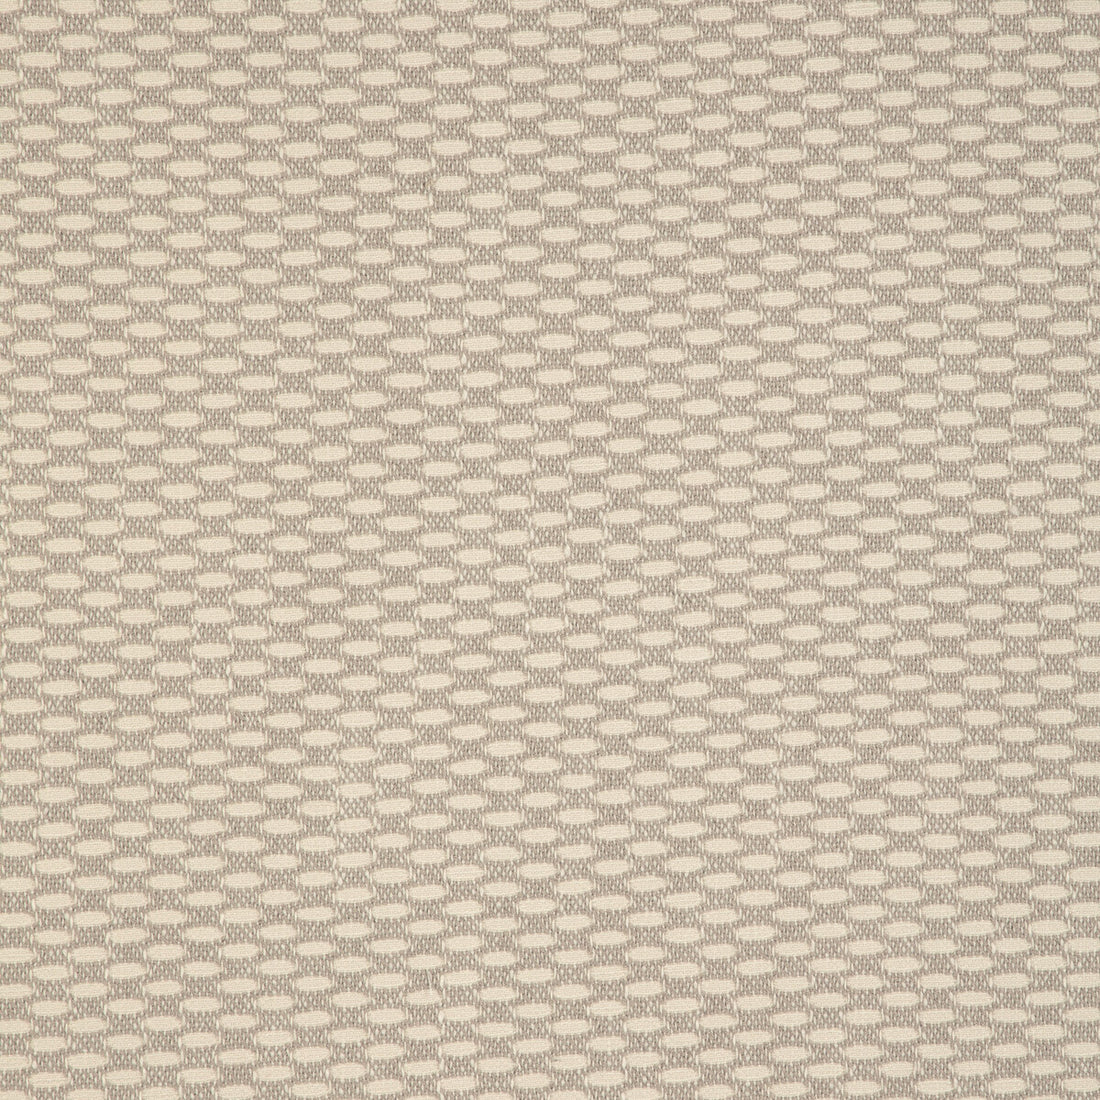 Kravet Smart fabric in 37005-11 color - pattern 37005.11.0 - by Kravet Smart in the Pavilion collection